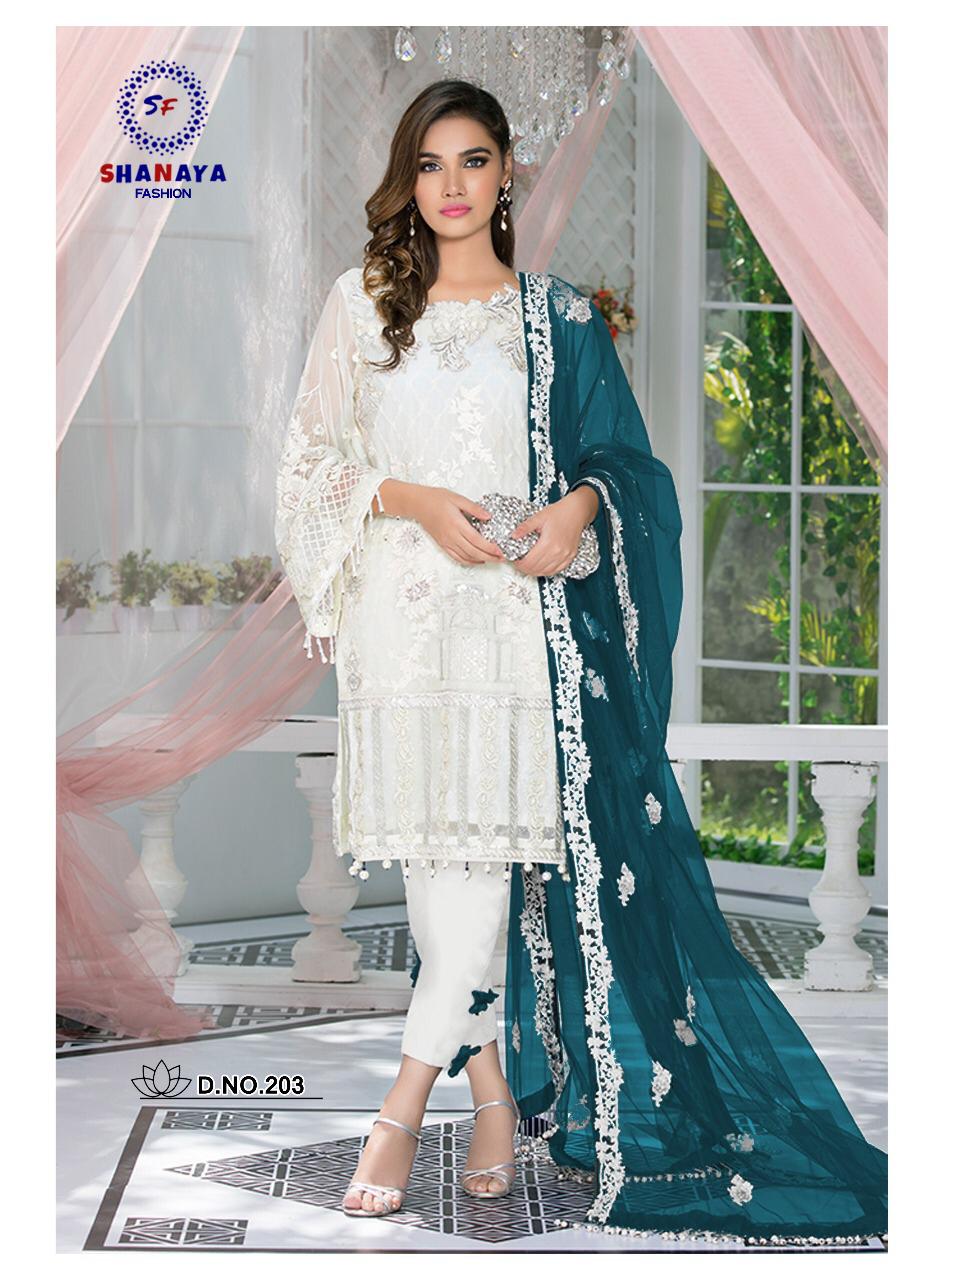 SHANAYA fashion rose classic blockbuster party wear stylish salwar kameez concept